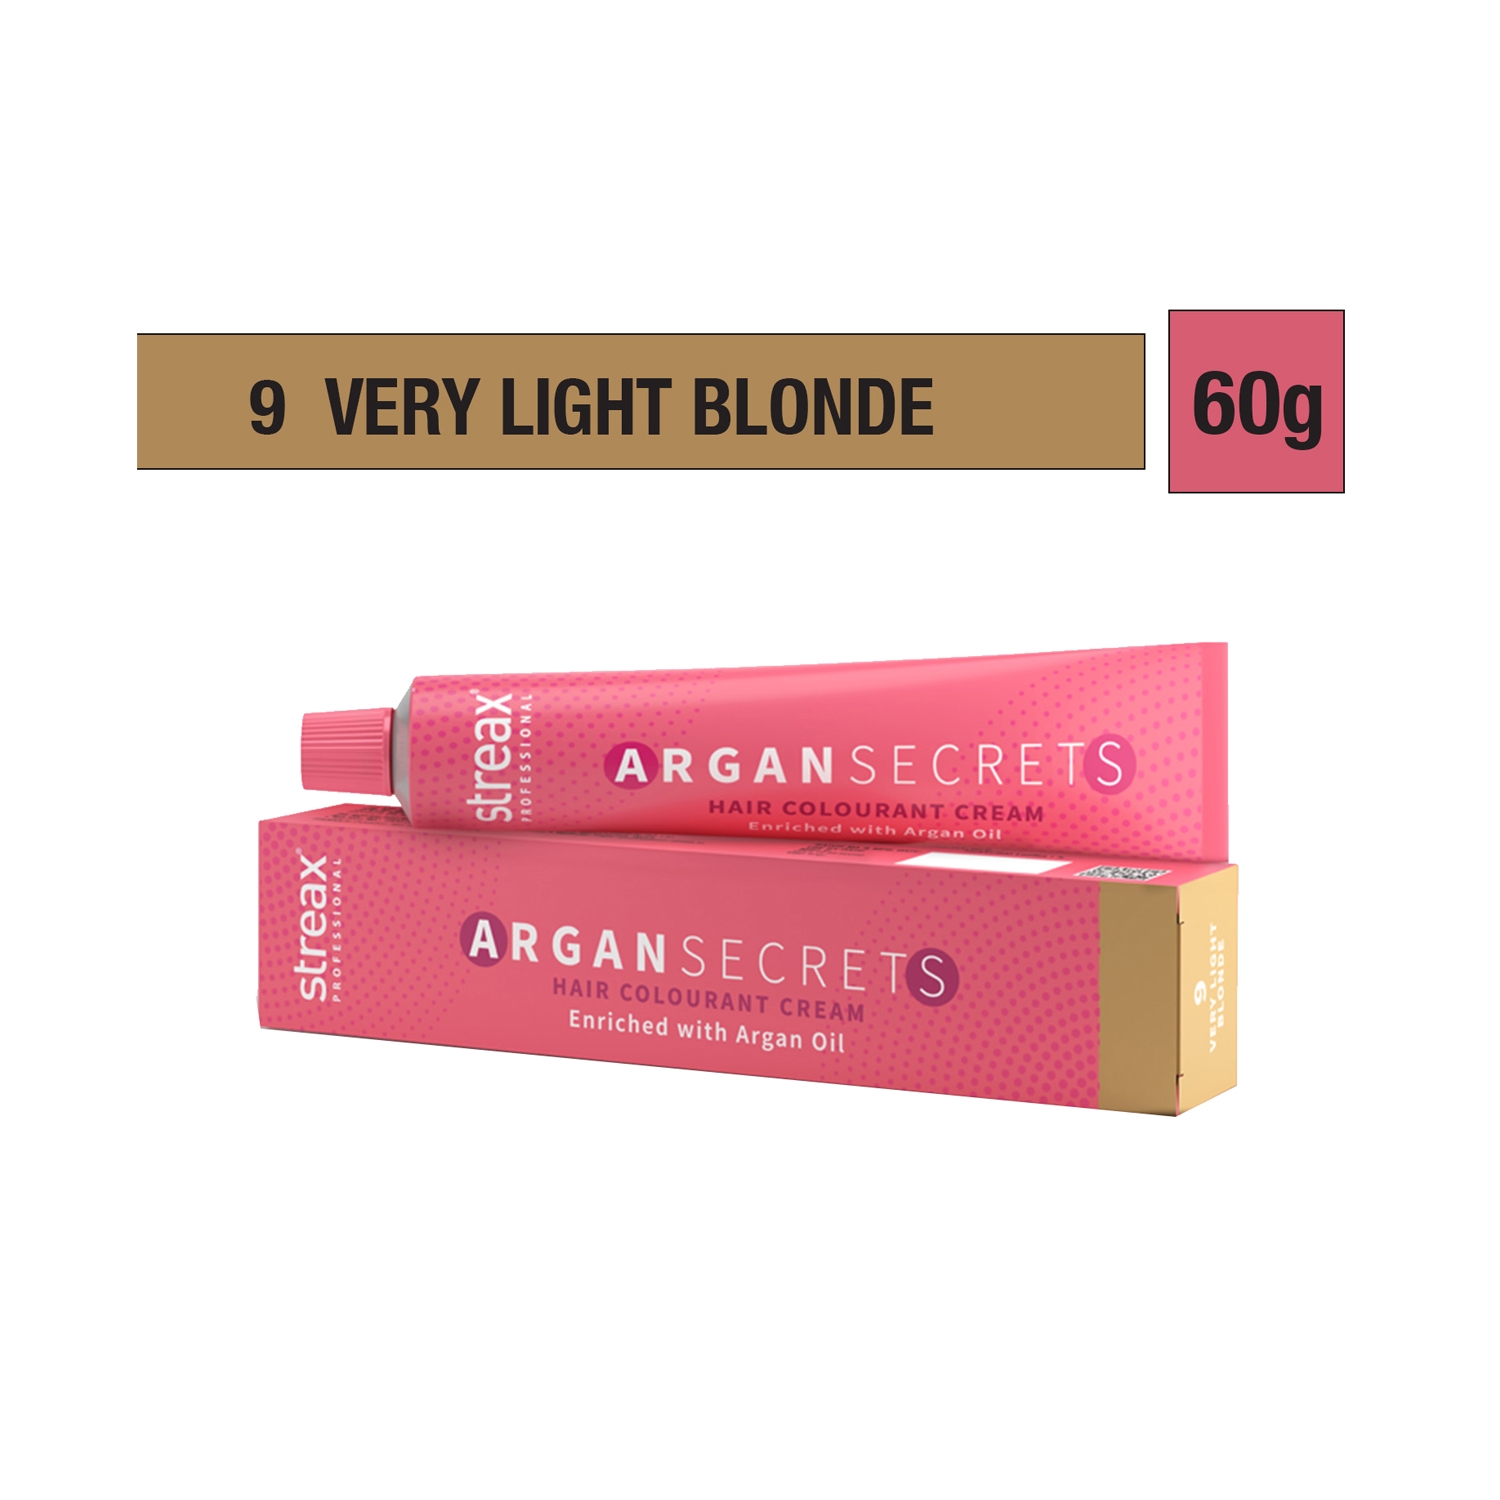 Streax Professional Argan Secrets Hair Colorant Cream - 9 Very Light Blonde (60g)